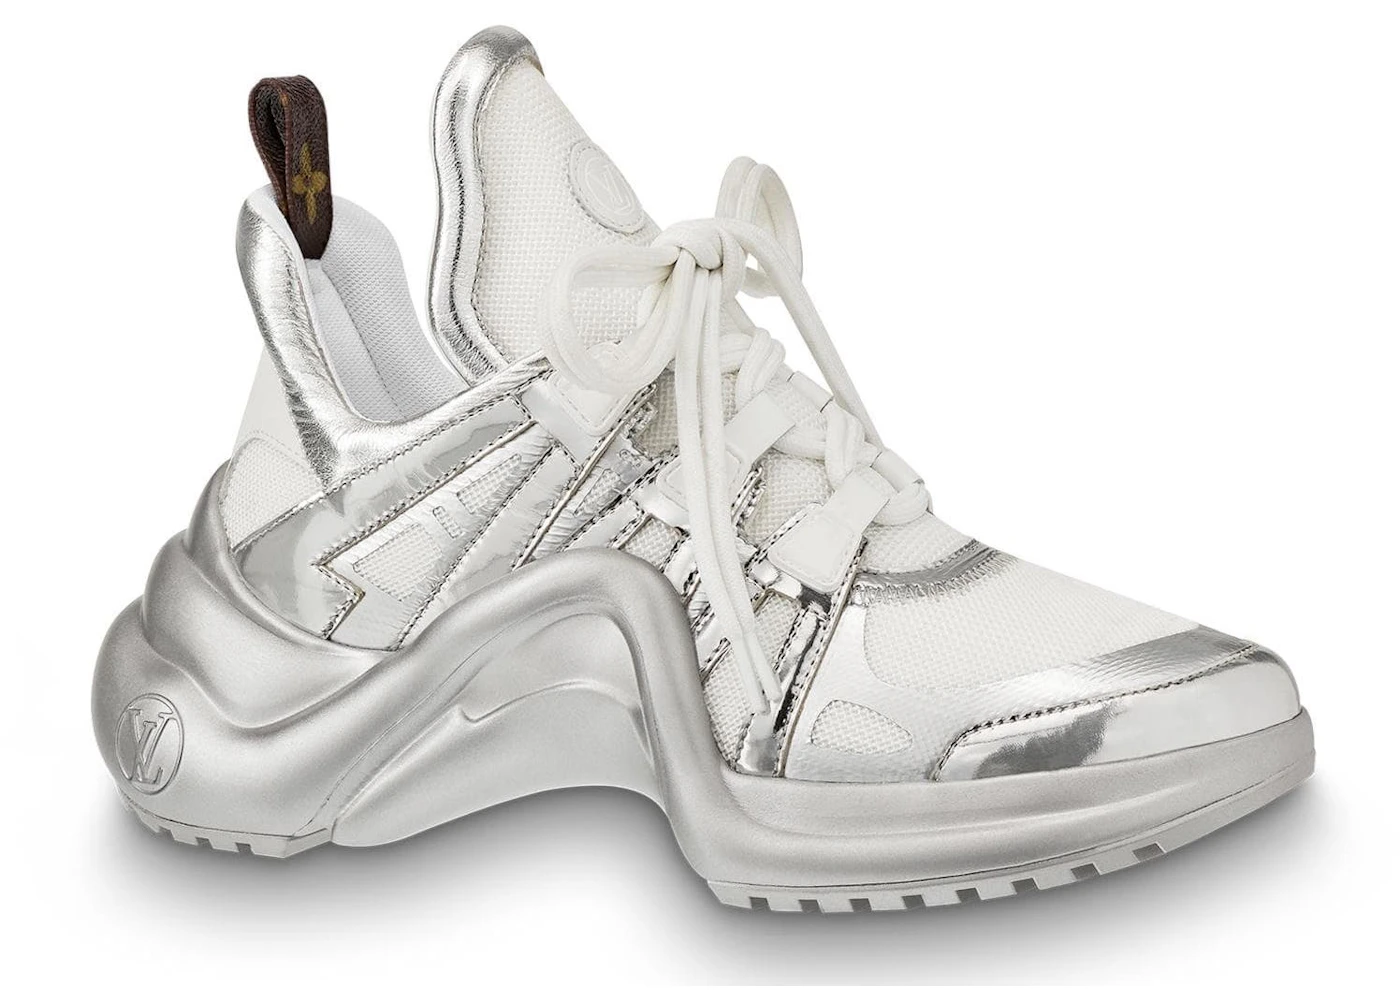 louis vuitton archlight sneakers white